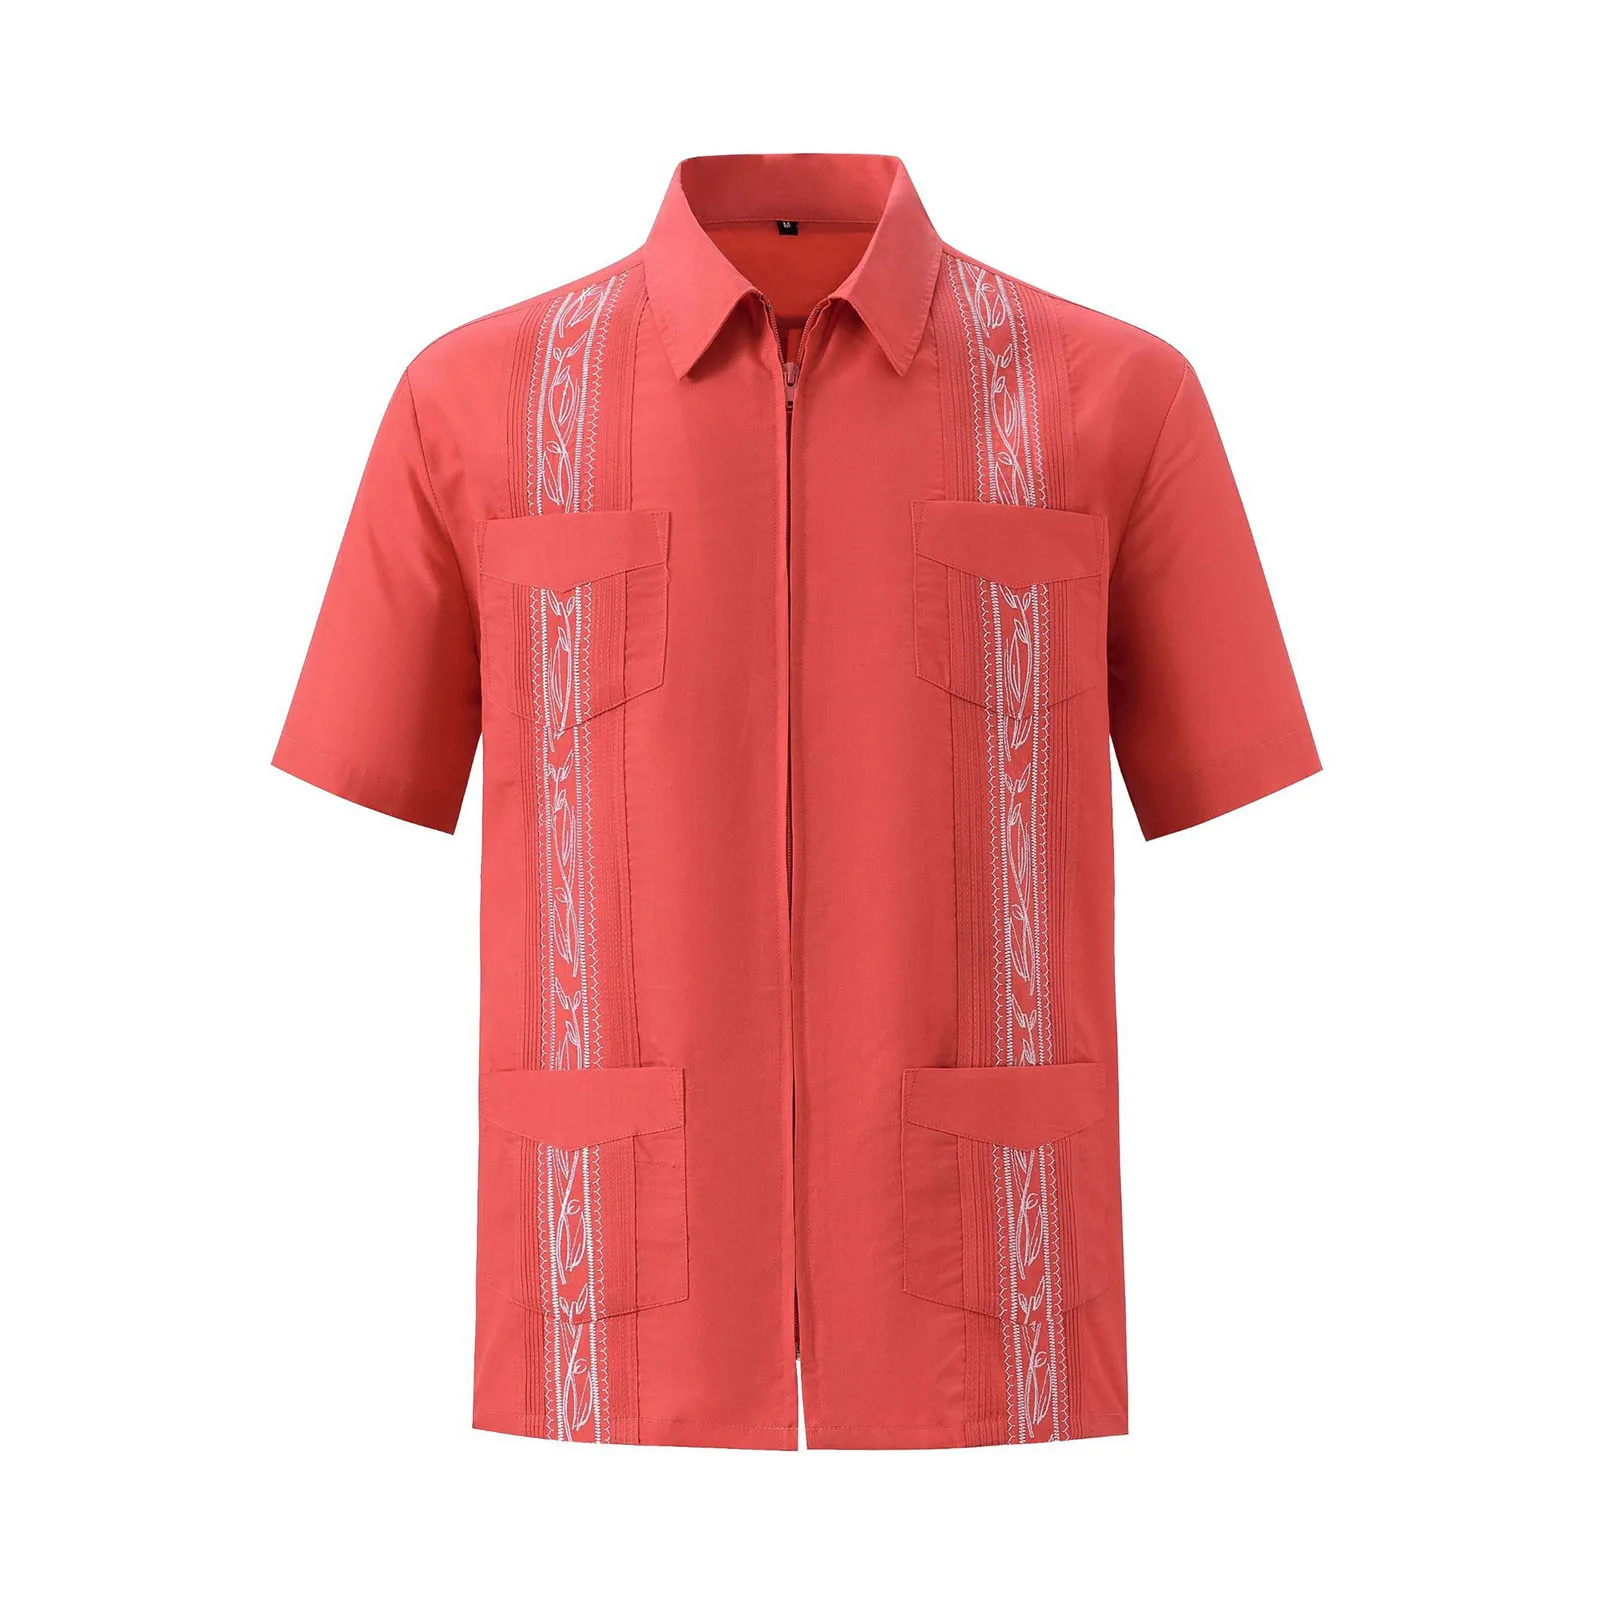 Men's Embroidery Shirt Full Zipper Short Sleeve Turn Down Collar Guayabera Shirts With Pockets Summer Vintage Mexican Shirt Tops